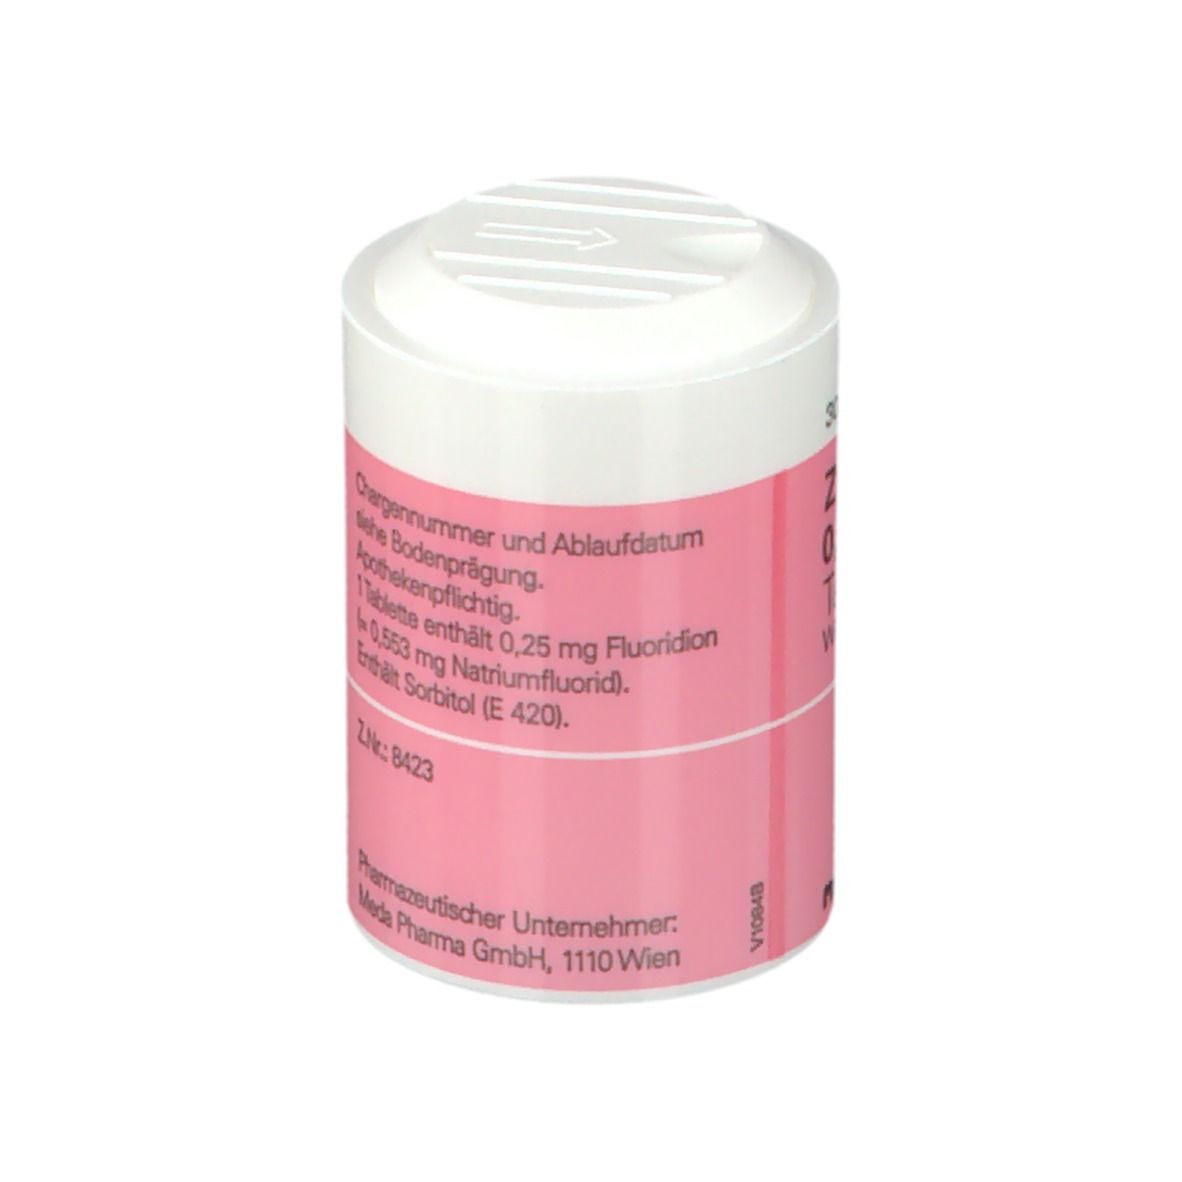 Zymafluor® 0,25 mg